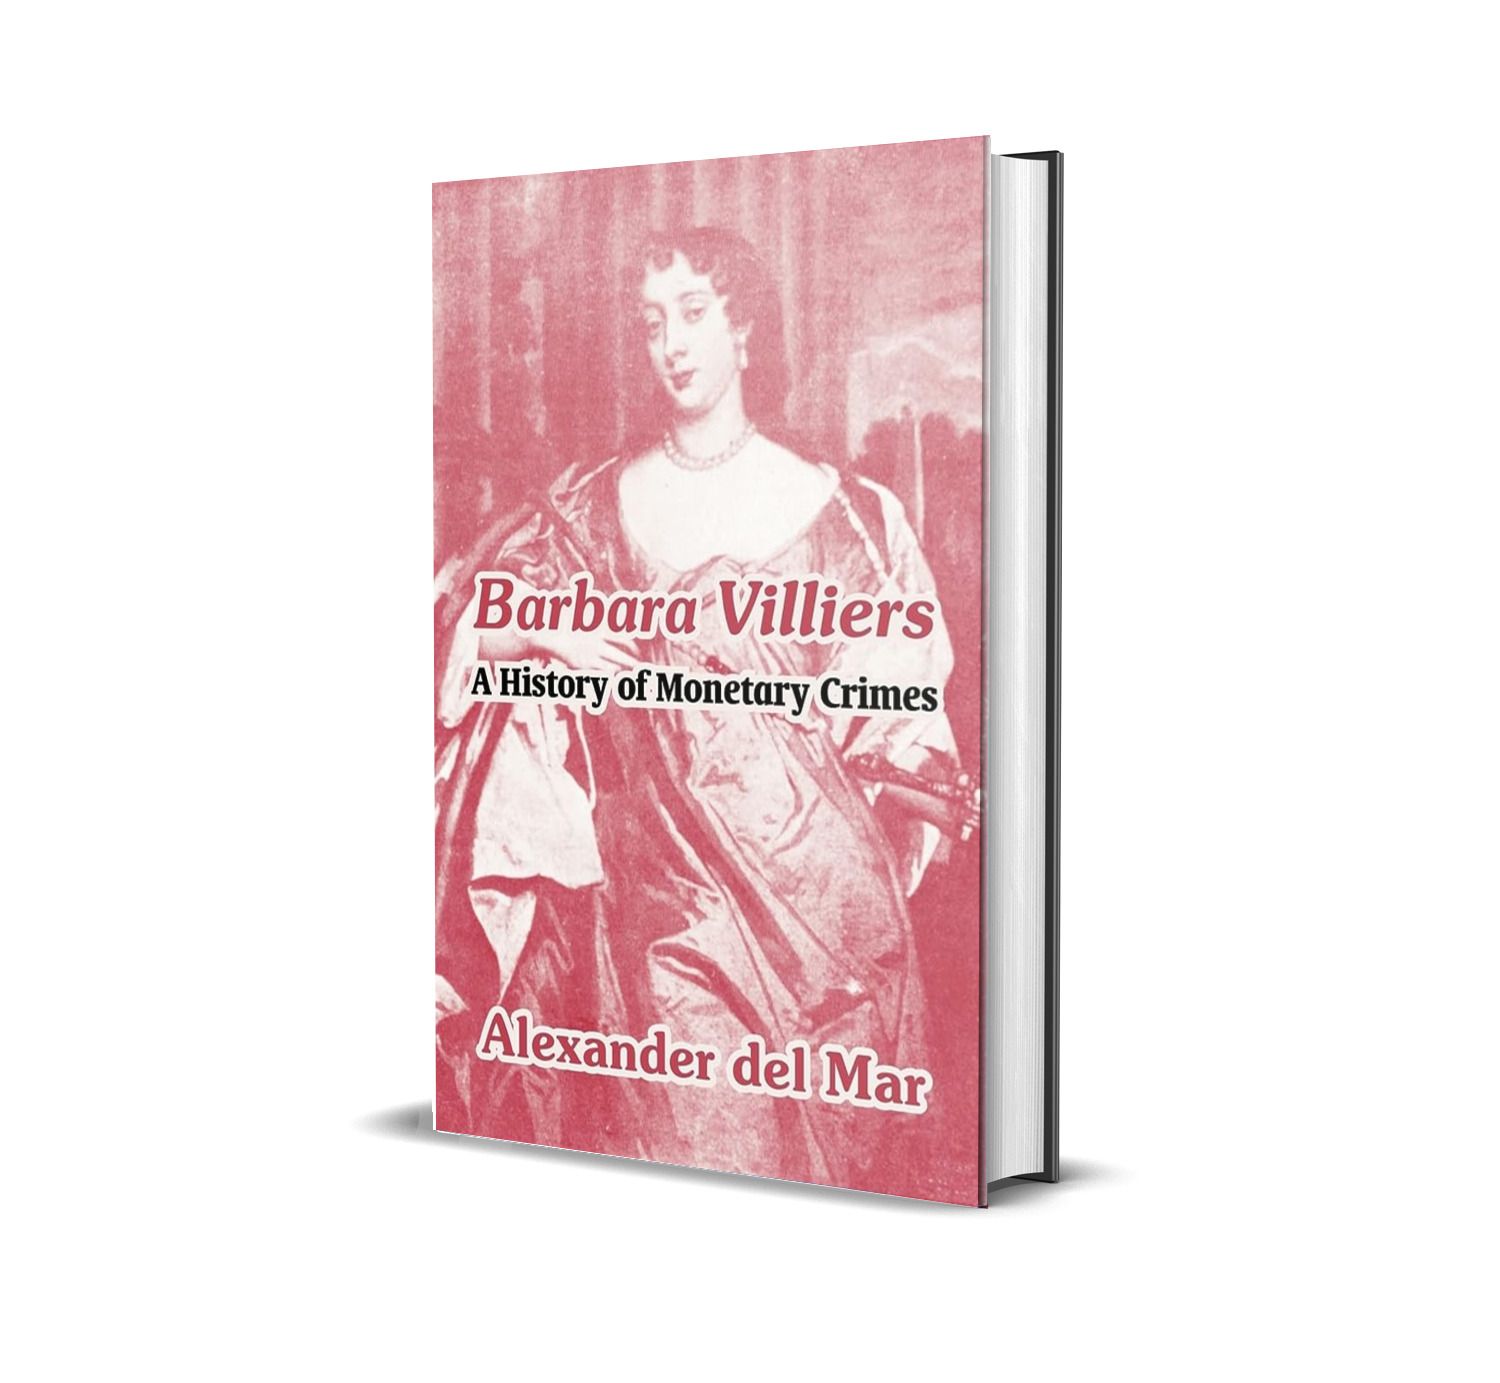 A History of Monetary Crimes by Alexander del Mar